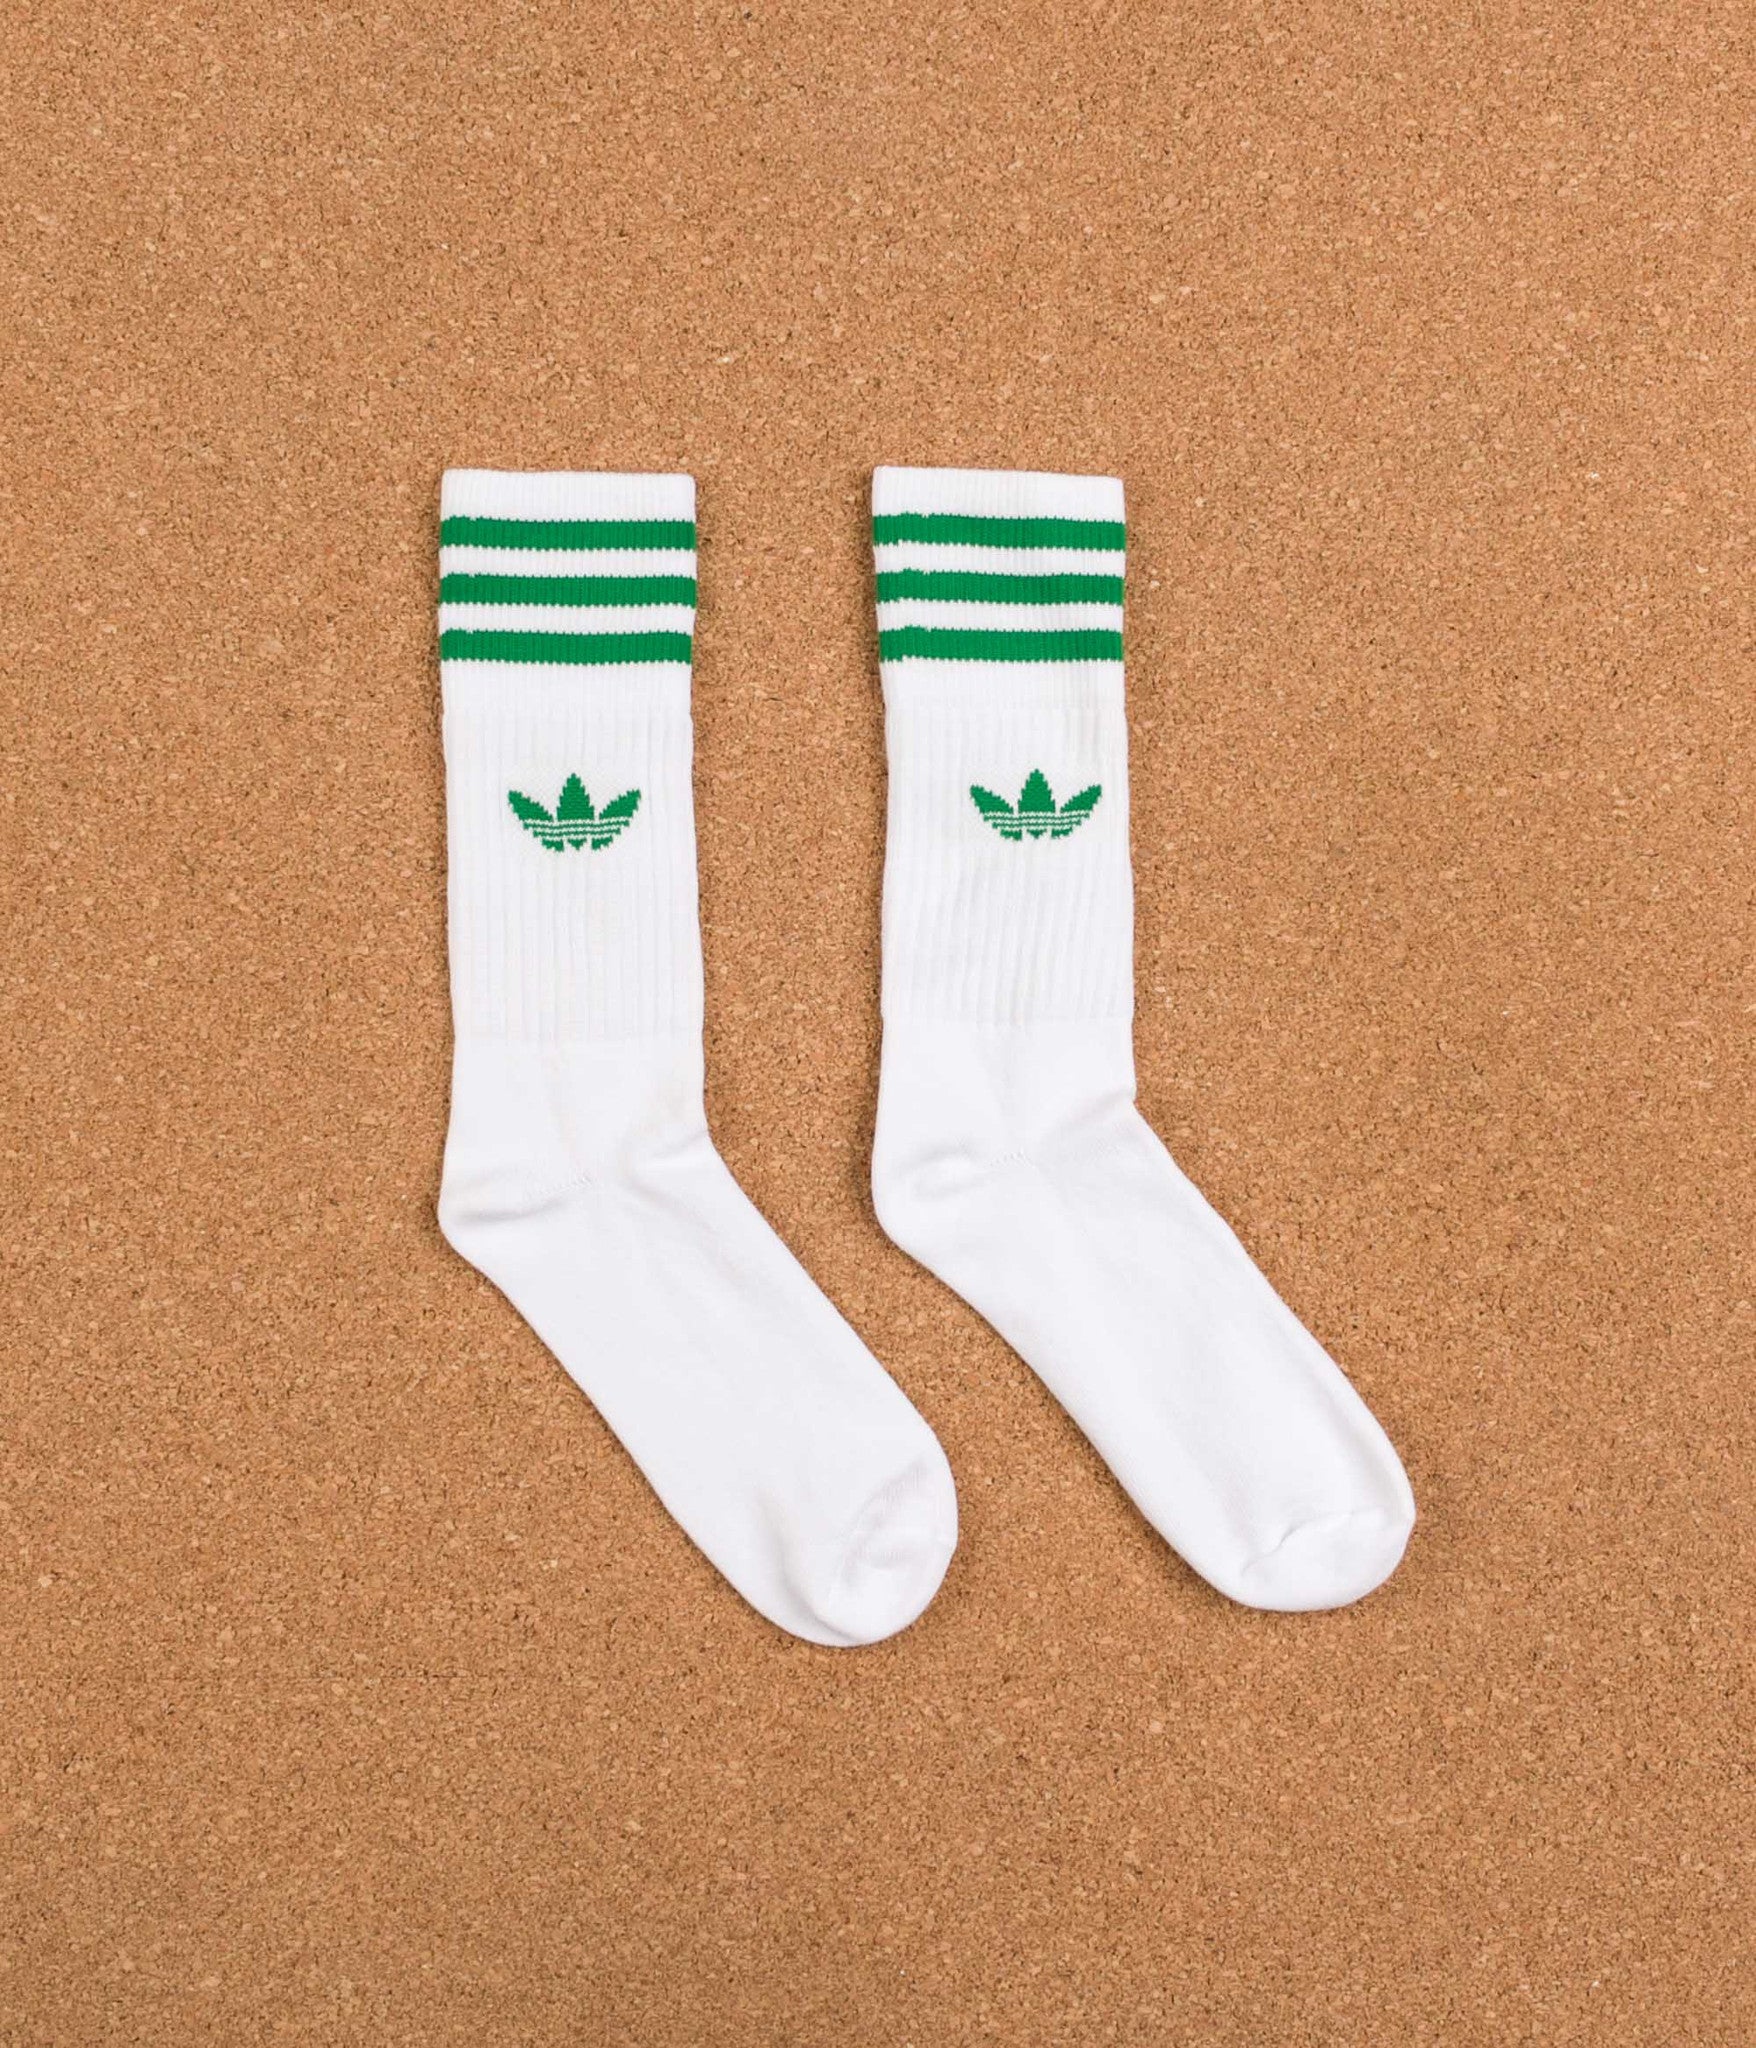 white and green adidas socks